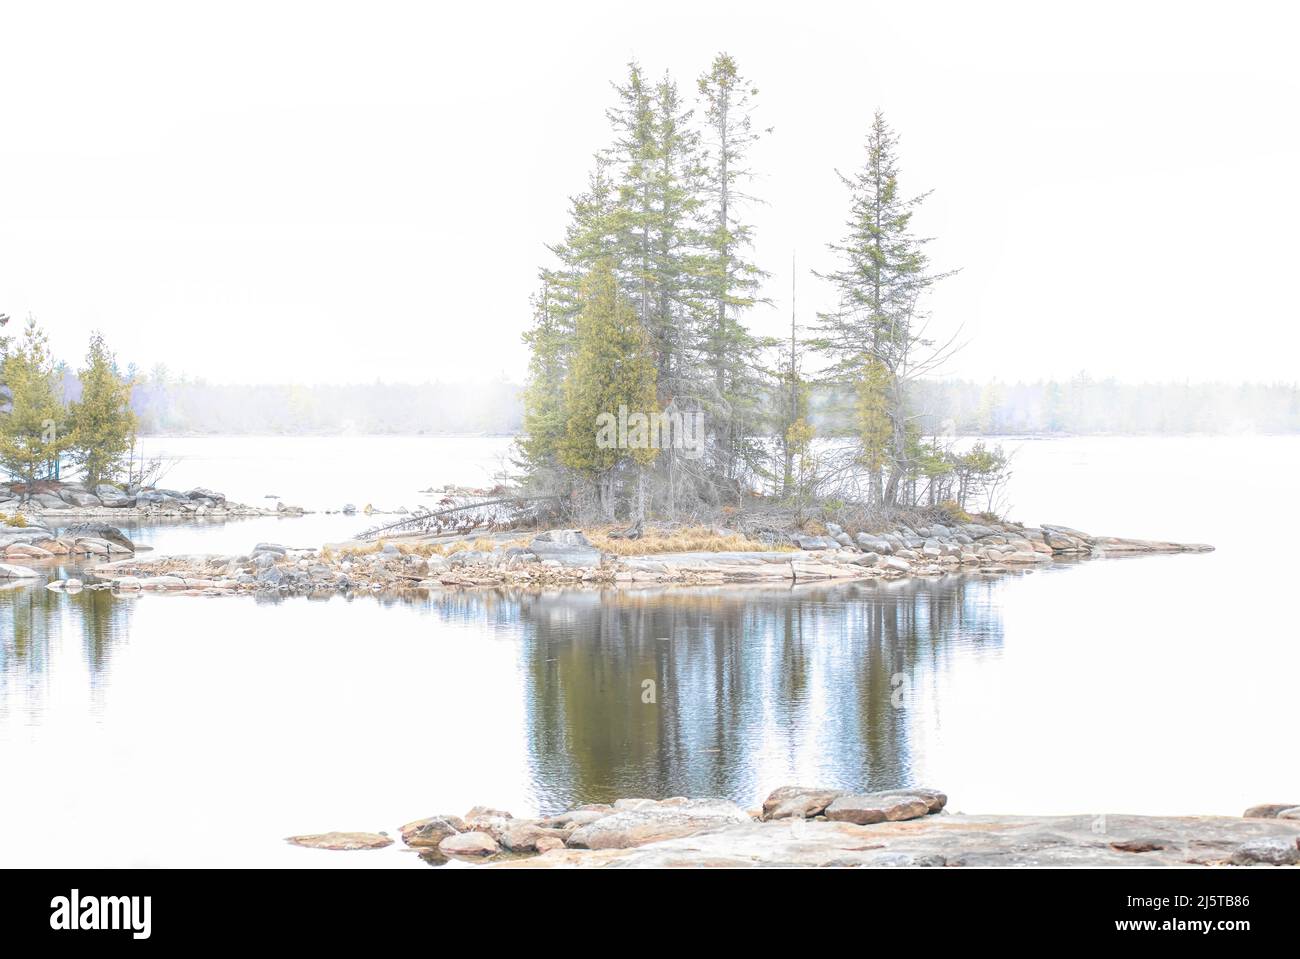 Small Island along the Ottawa river, Ontario, Canada in the spring. Stock Photo